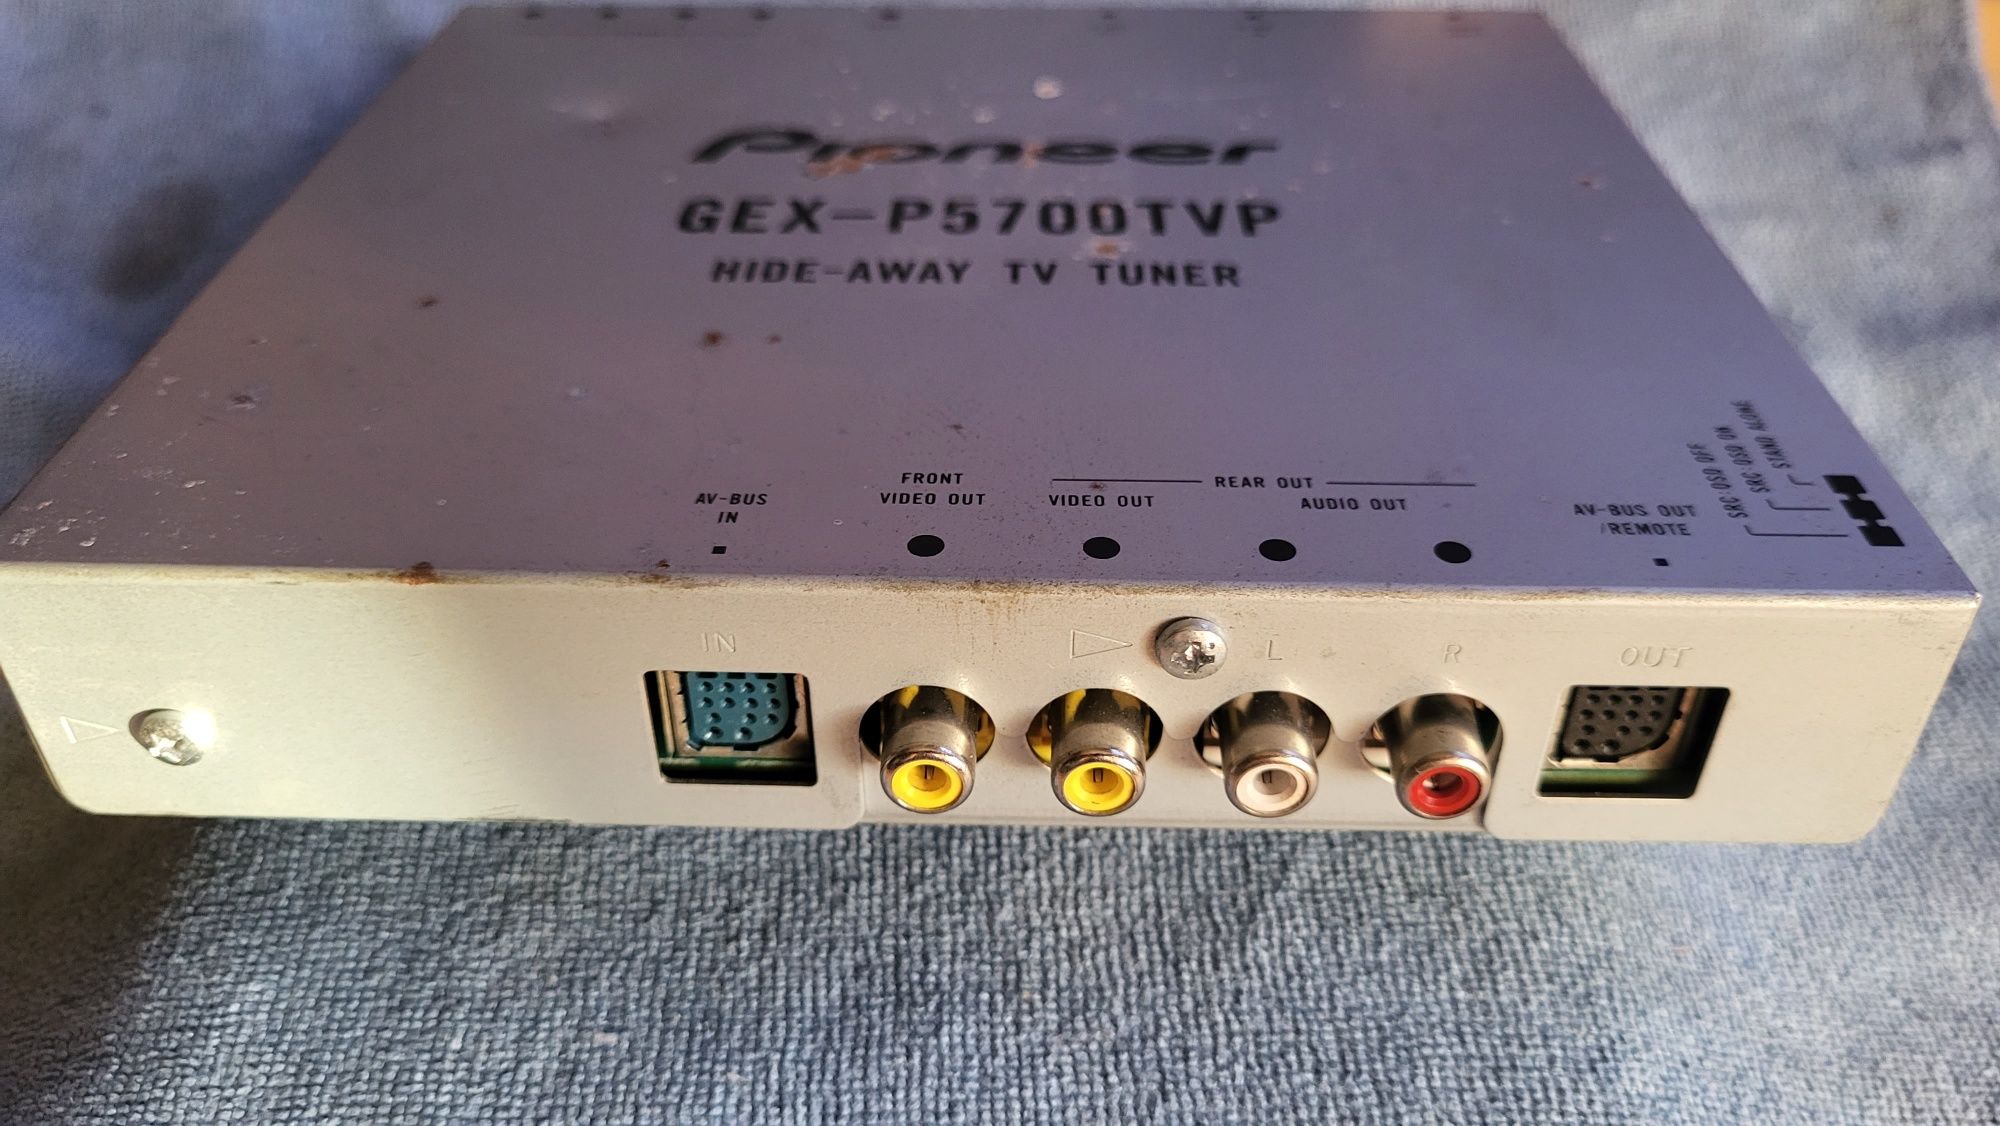 ТВ тюнер Pioneer GEX-P5700T